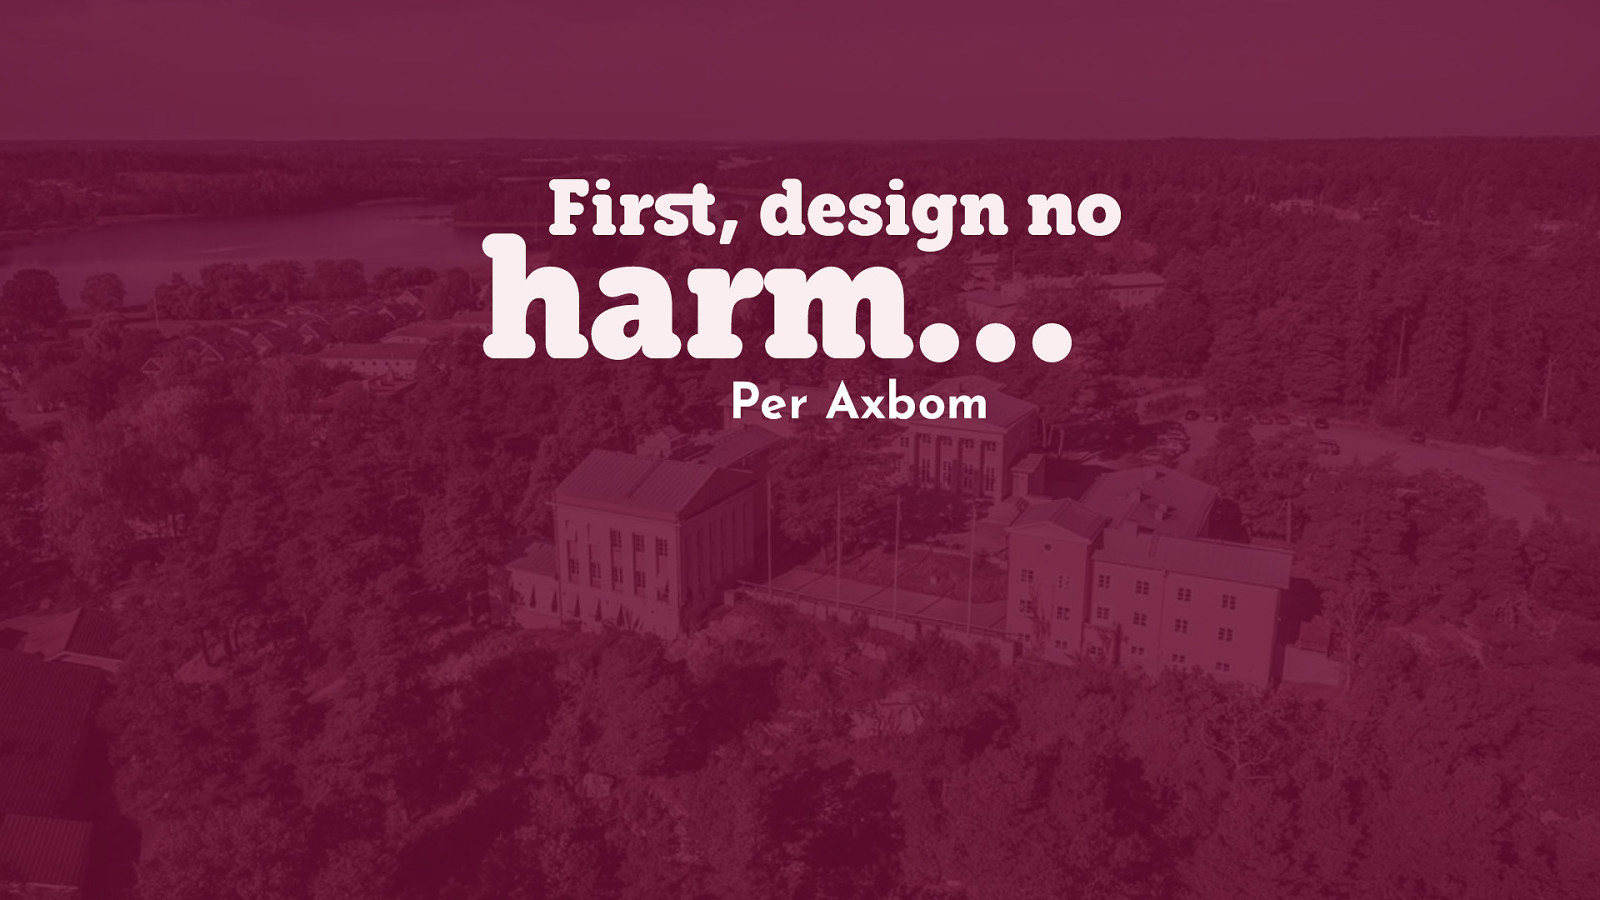 First, design no harm